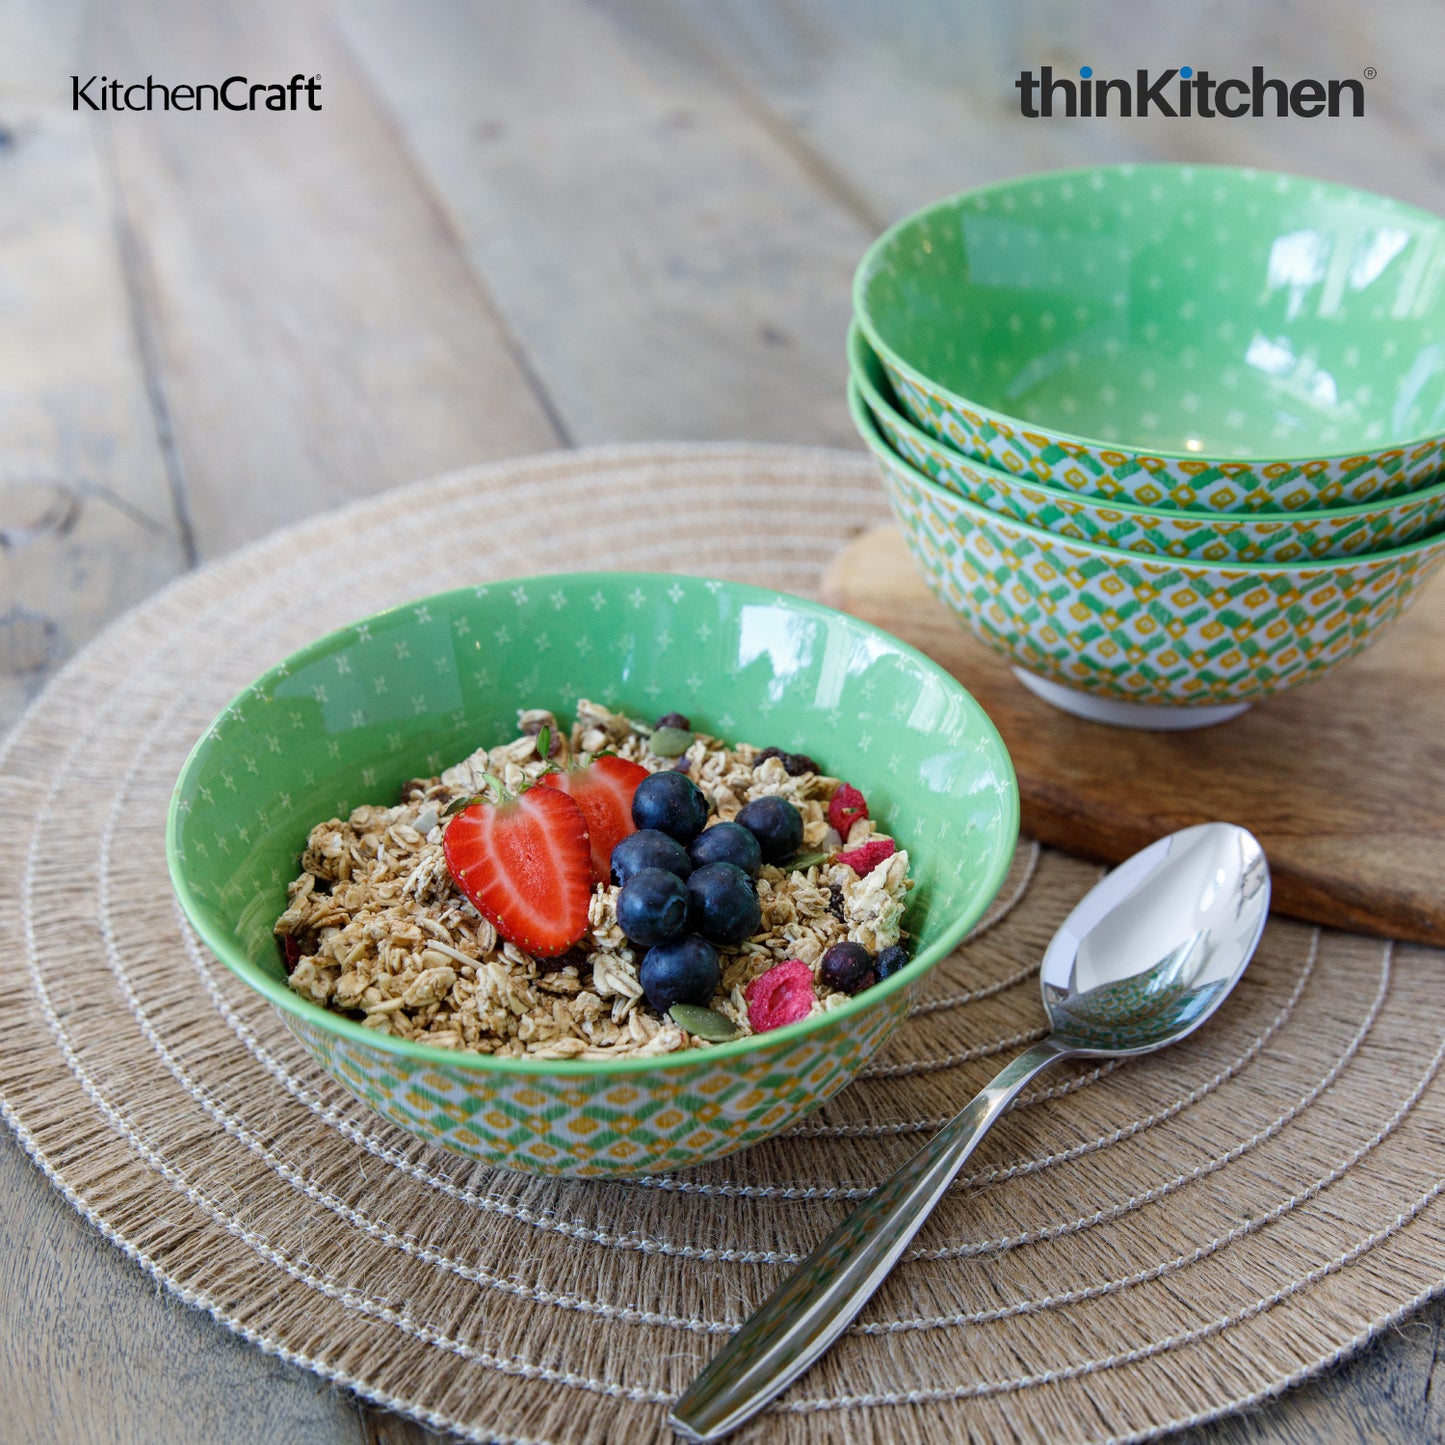 Kitchencraft Green Geometric Ceramic Bowl